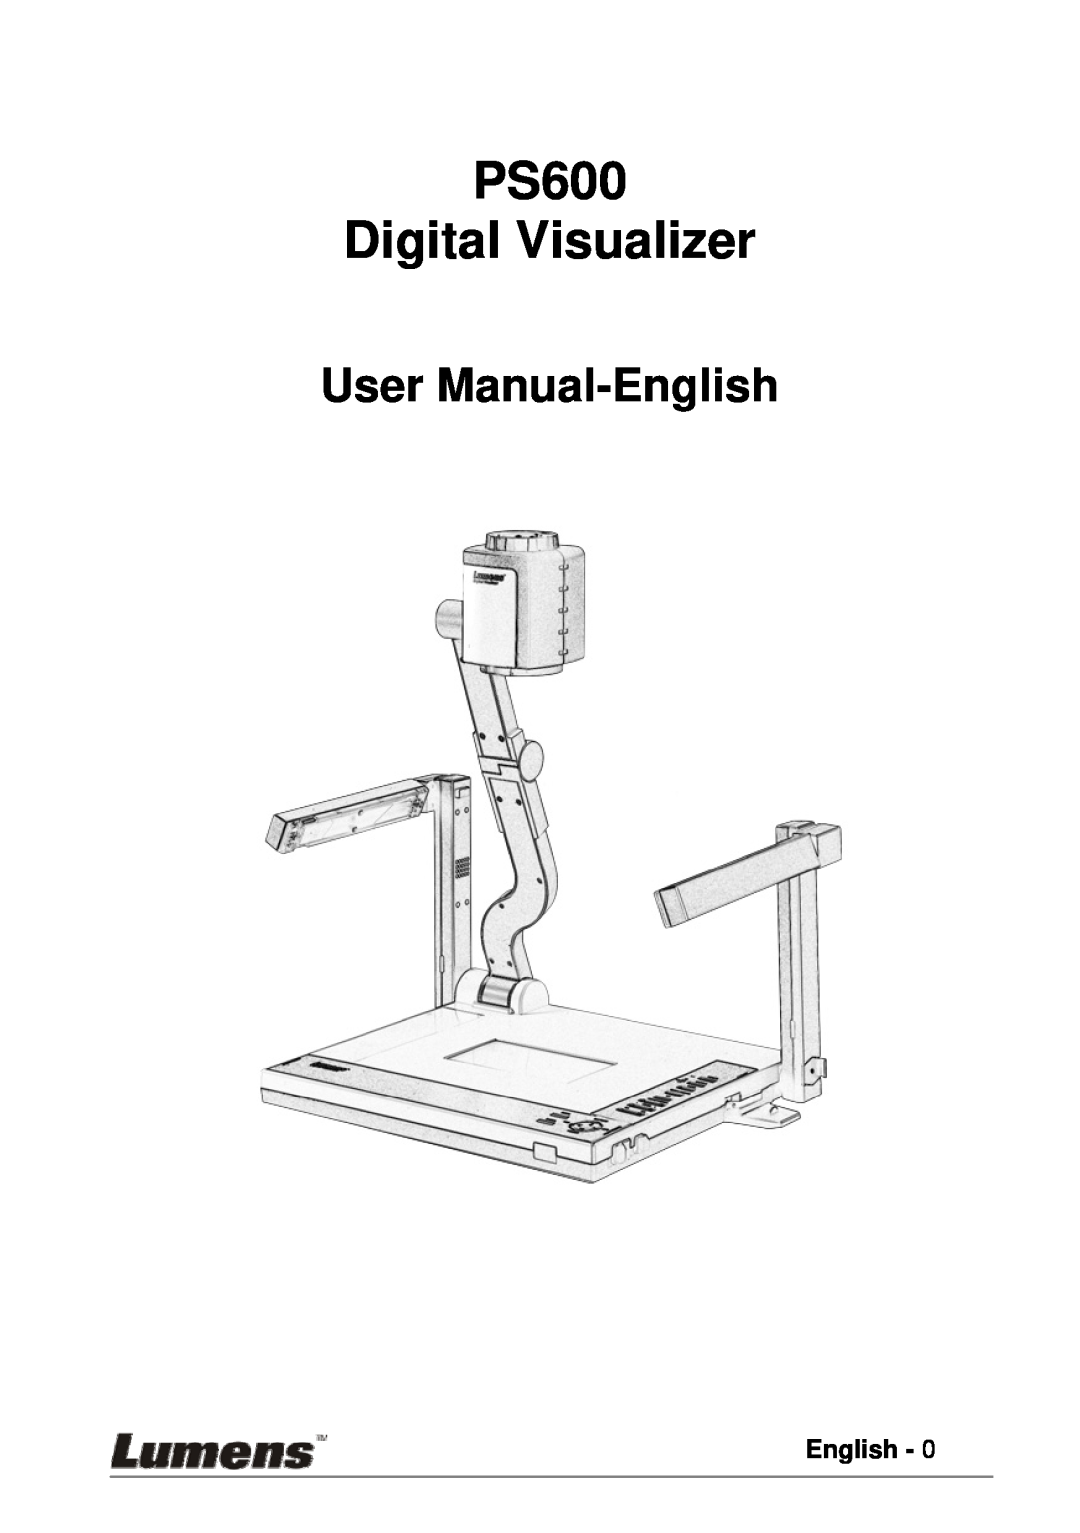 Lumens Technology user manual PS600 Digital Visualizer, User Manual-English 